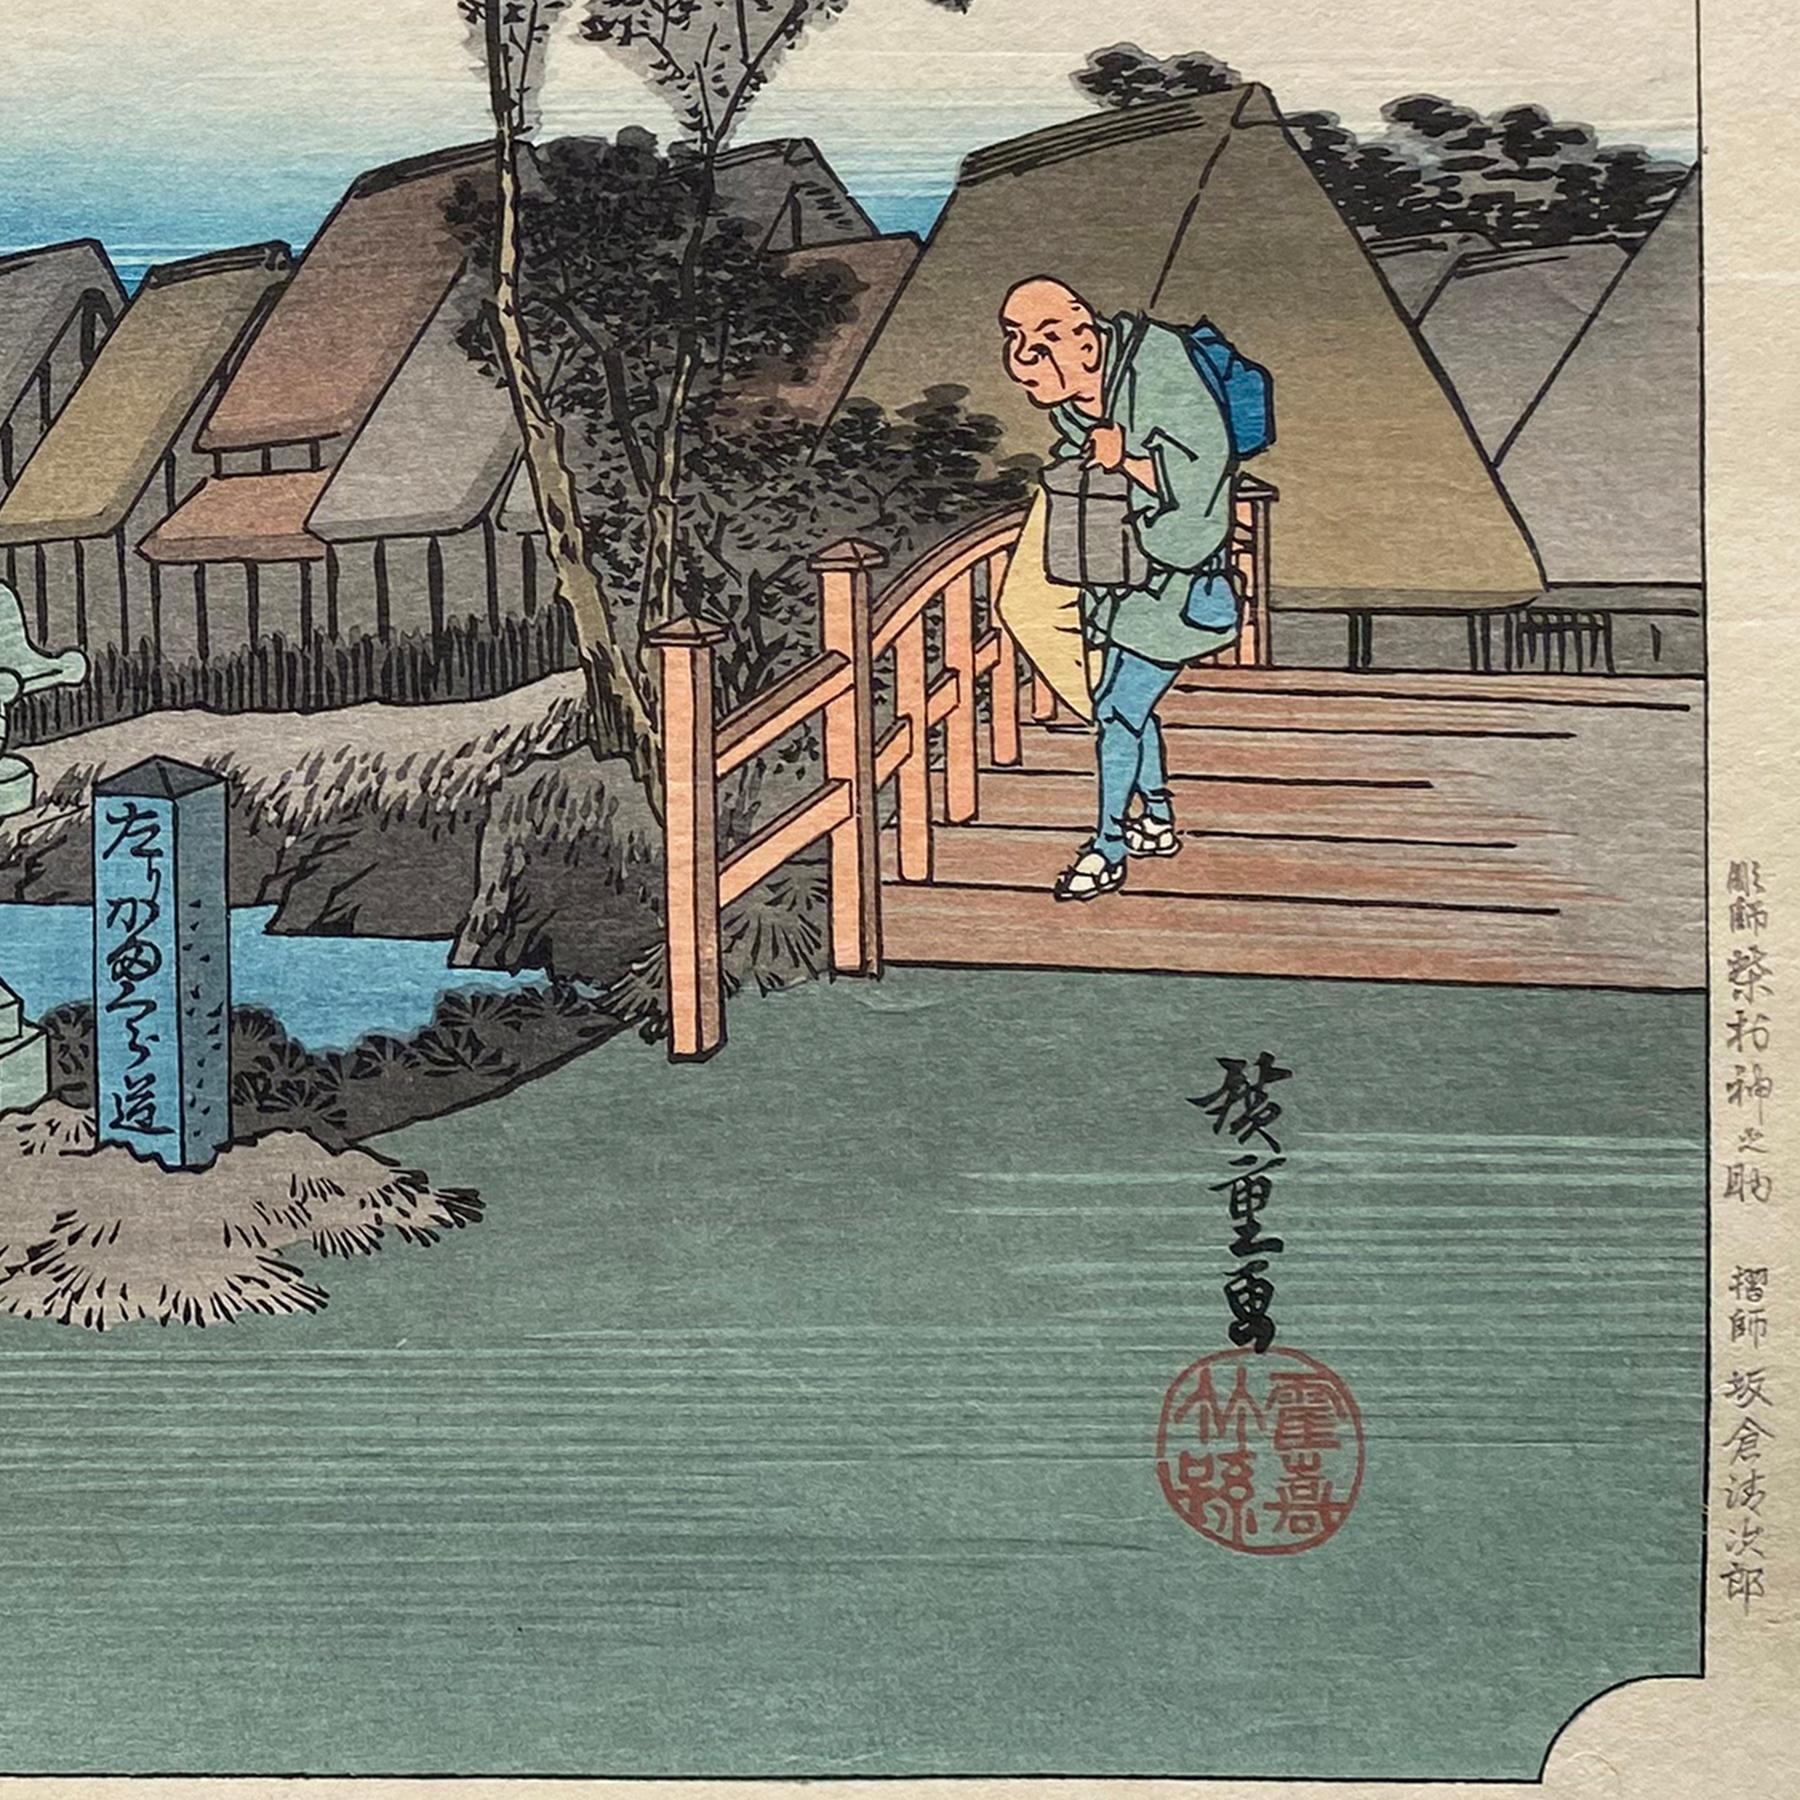 'View of Totsuka', After Utagawa Hiroshige 歌川廣重, Ukiyo-e Woodblock, Tokaido - Print by Utagawa Hiroshige (Ando Hiroshige)